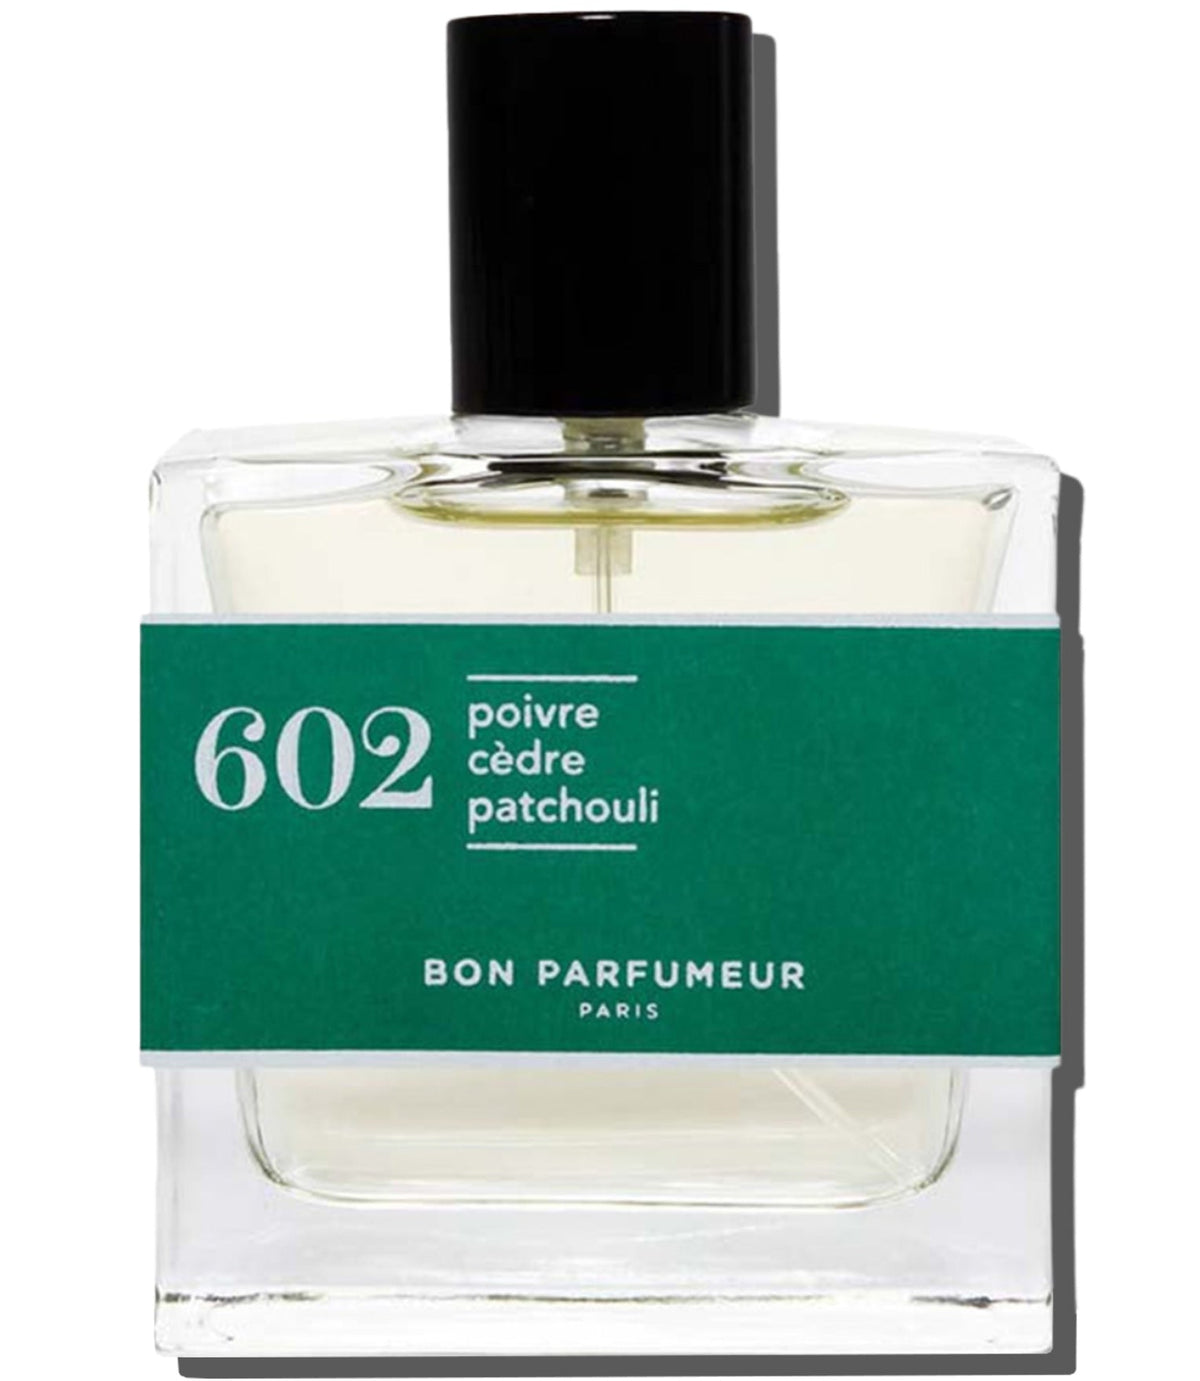 Eau de Parfum 602: Pepper, Cedar, Patchouli 30ml